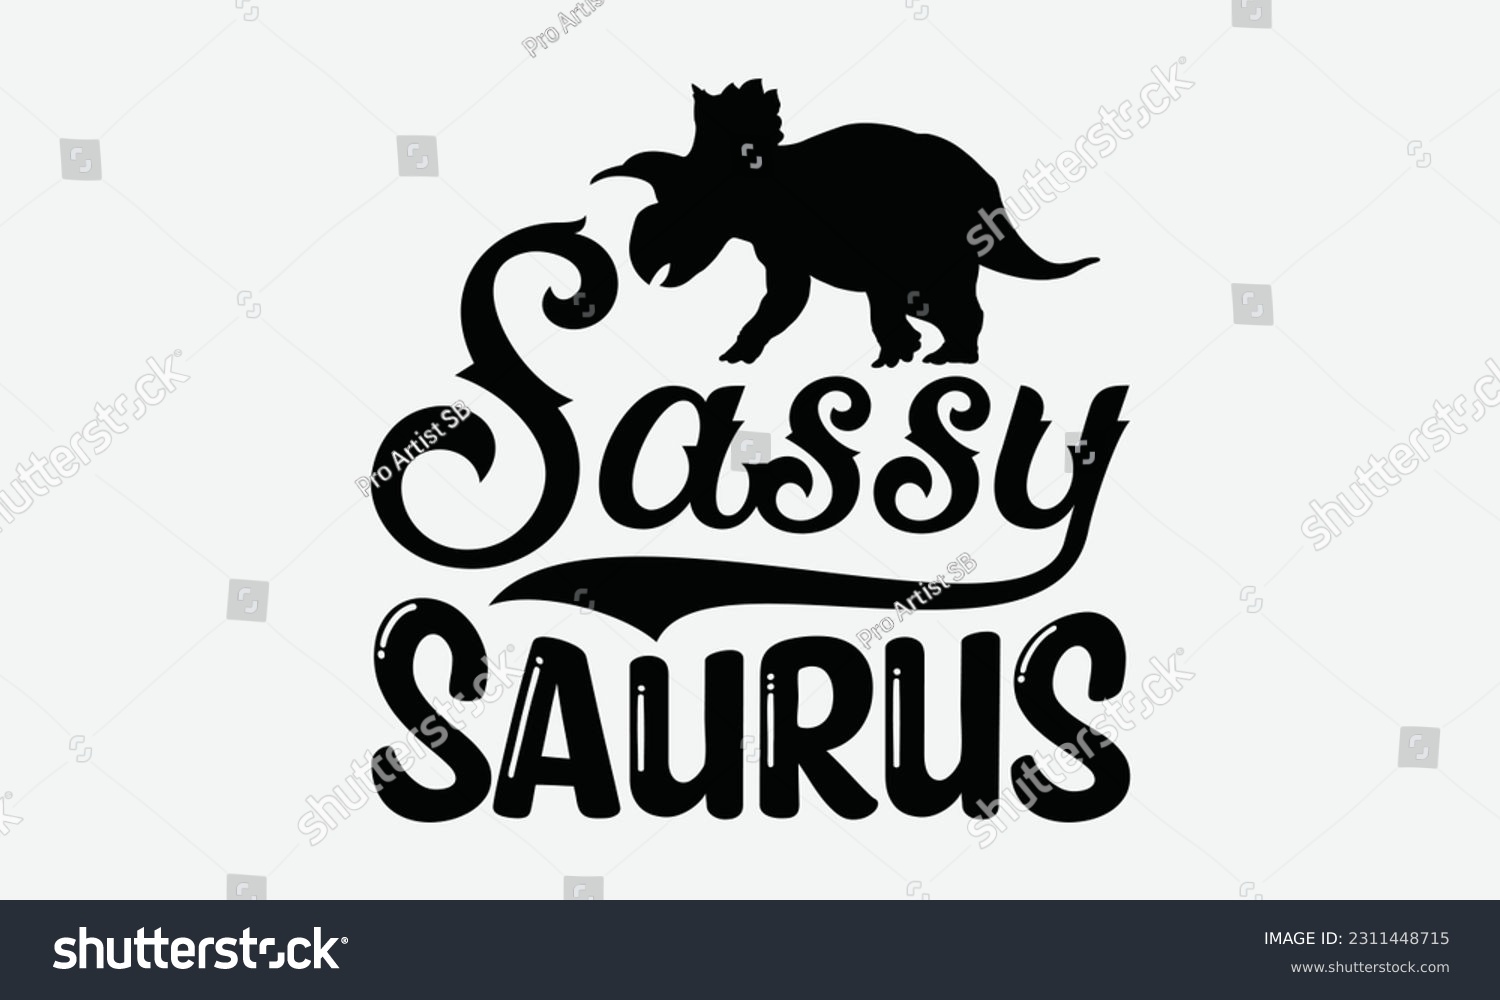 SVG of Sassy Saurus - Dinosaur SVG Design, Handmade Calligraphy Vector Illustration, Greeting Card Template With Typography Text. svg